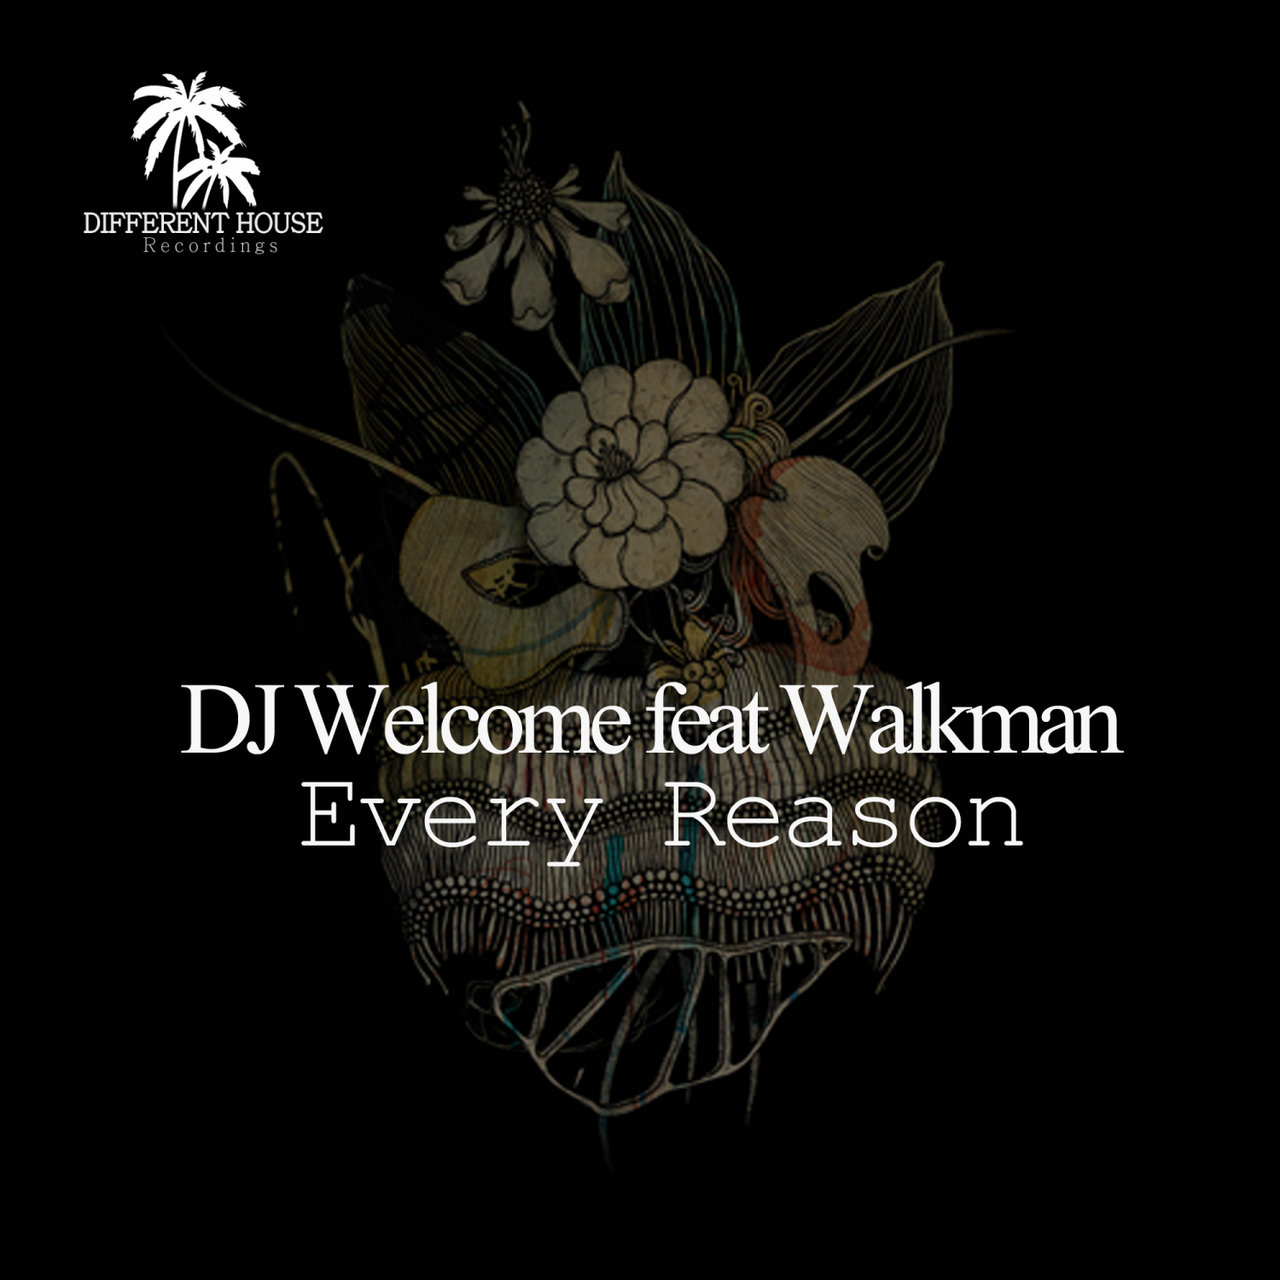 Dj Welcome ft Walkman - Every Reason / DH Soul Claps Inc.